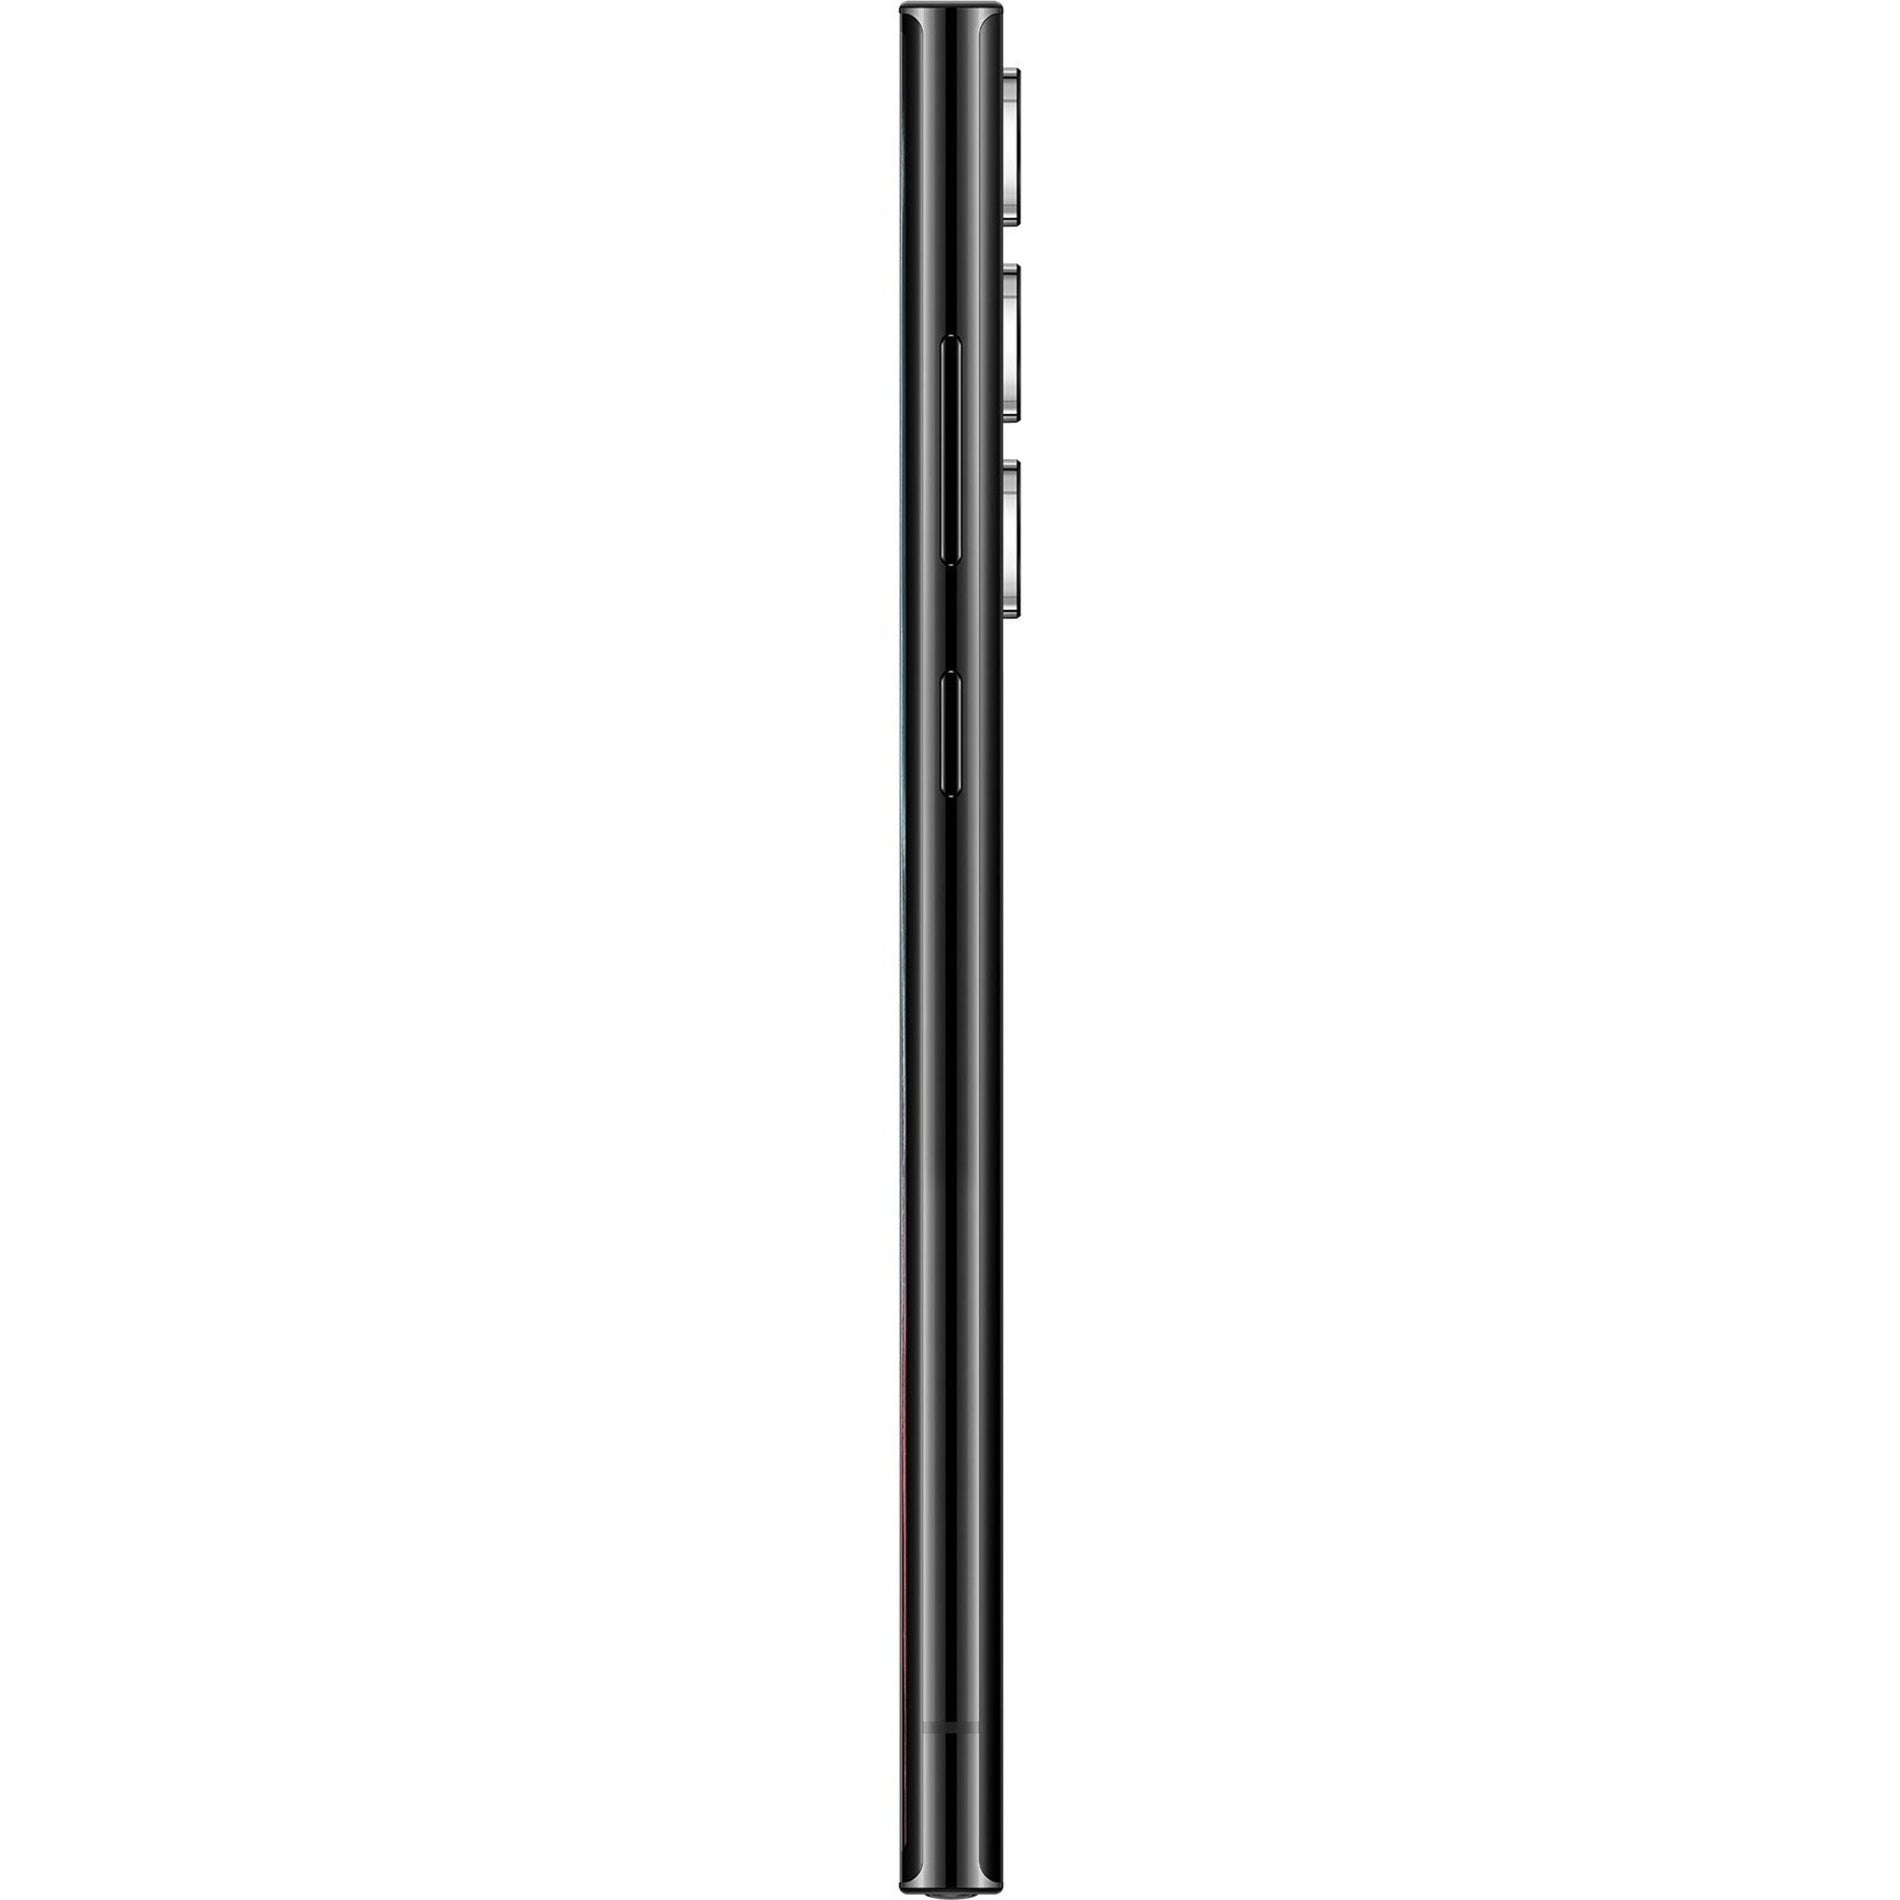 Samsung Galaxy S22 Ultra 128GB Unlocked Smartphone - Phantom Black [Discontinued]